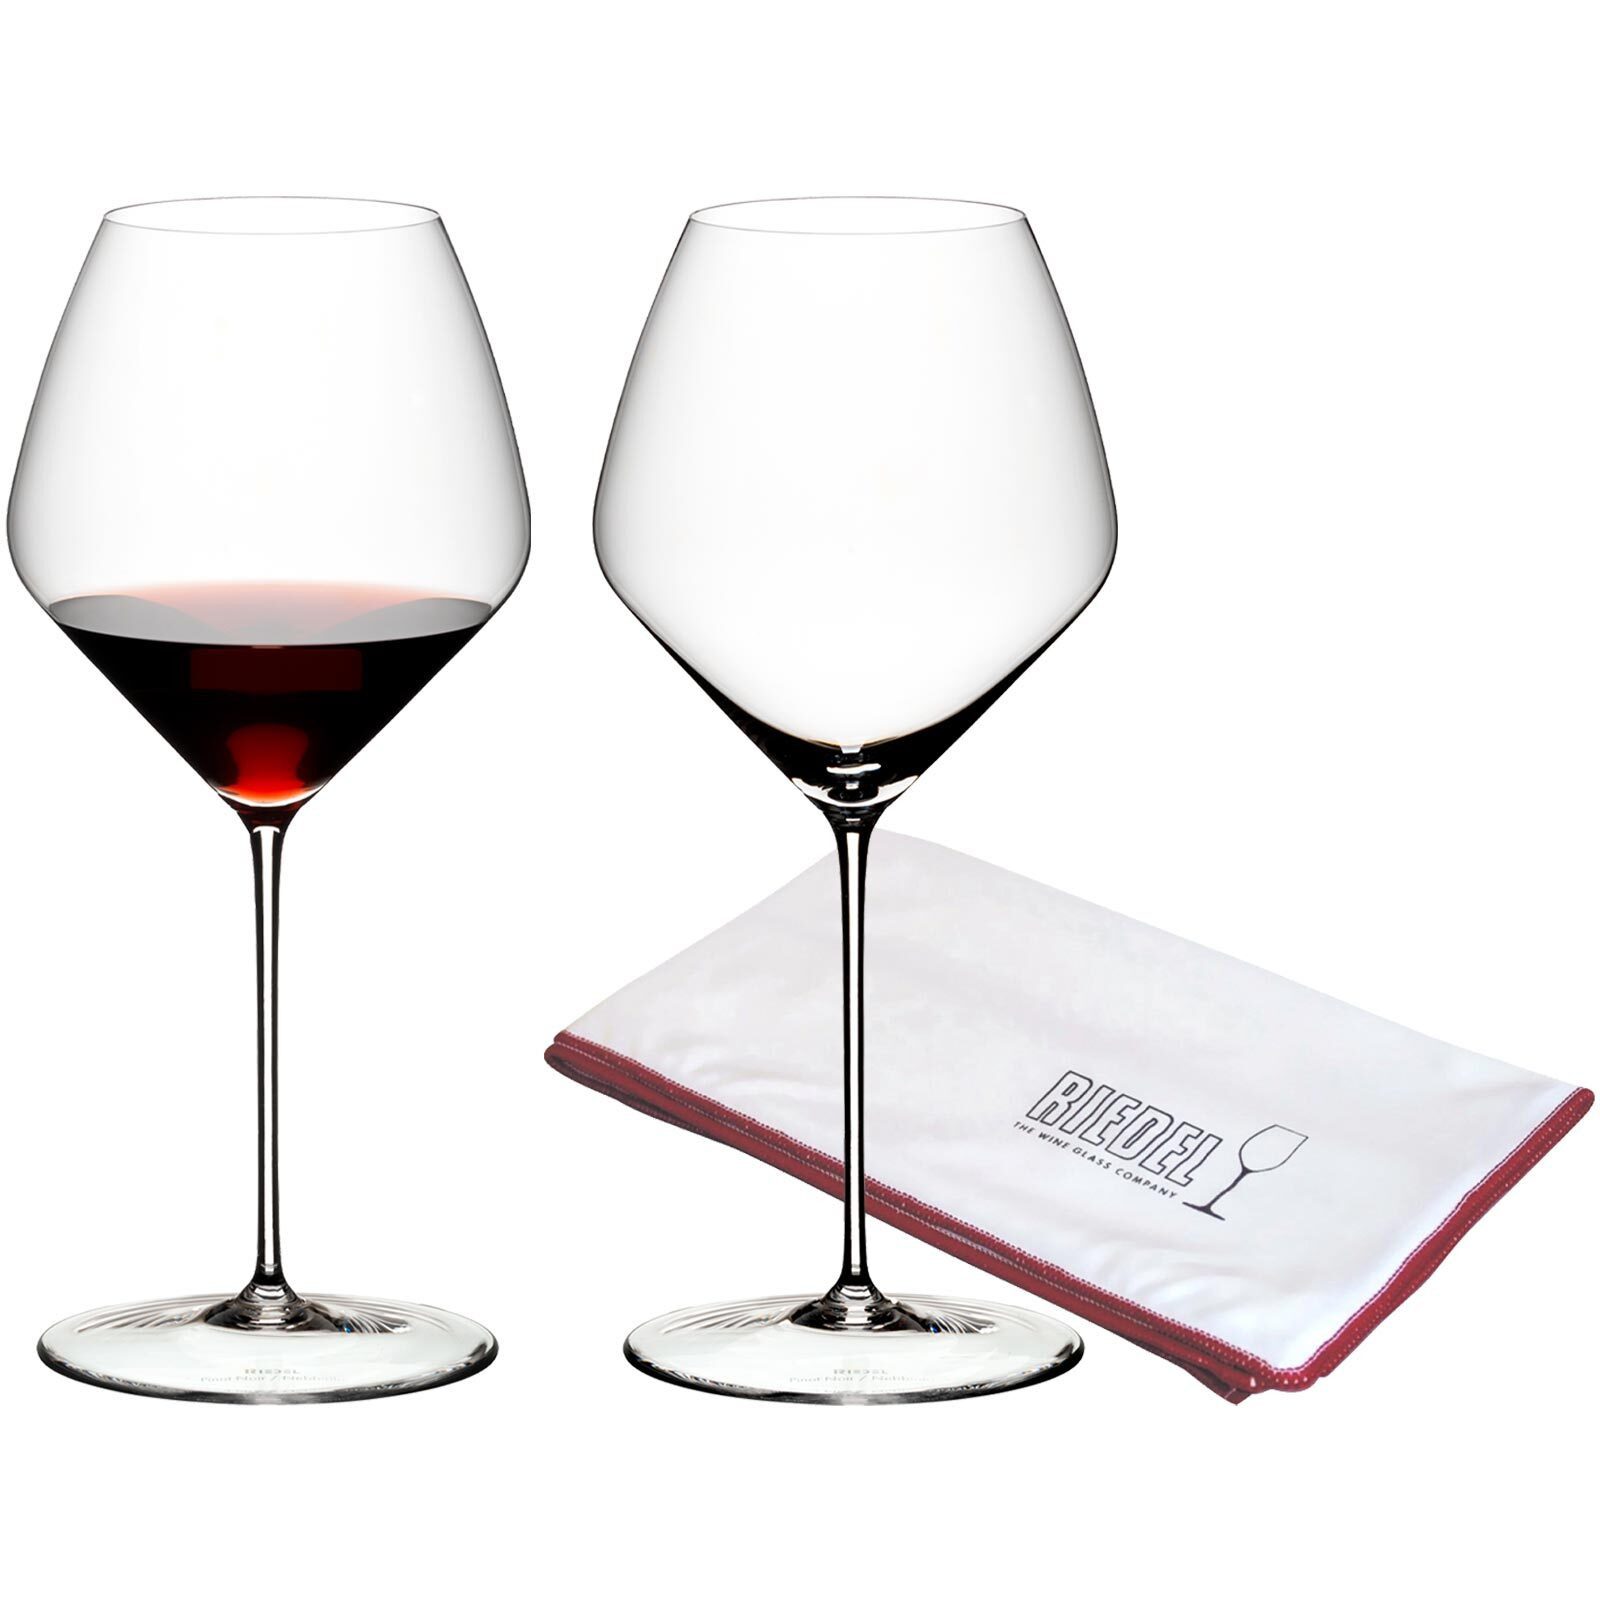 RIEDEL THE WINE GLASS COMPANY Rotweinglas Veloce Pinot Noir / Nebbiolo Gläser + Poliertuch, Glas